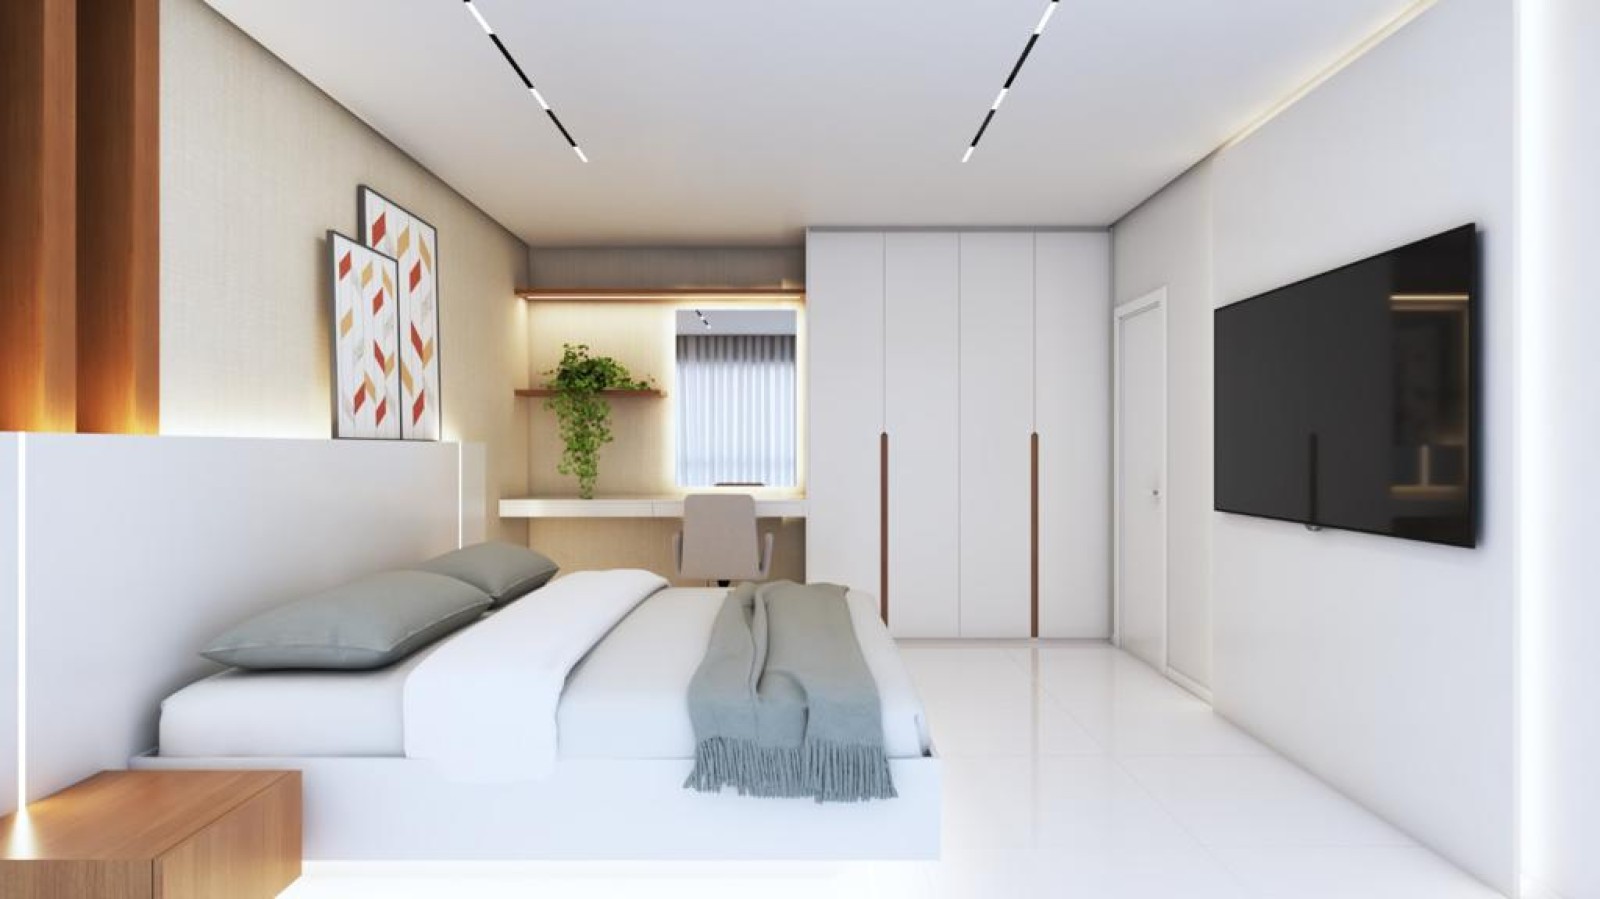 3 Bedroom Luxury House, for sale, in Portimão, Algarve_224940